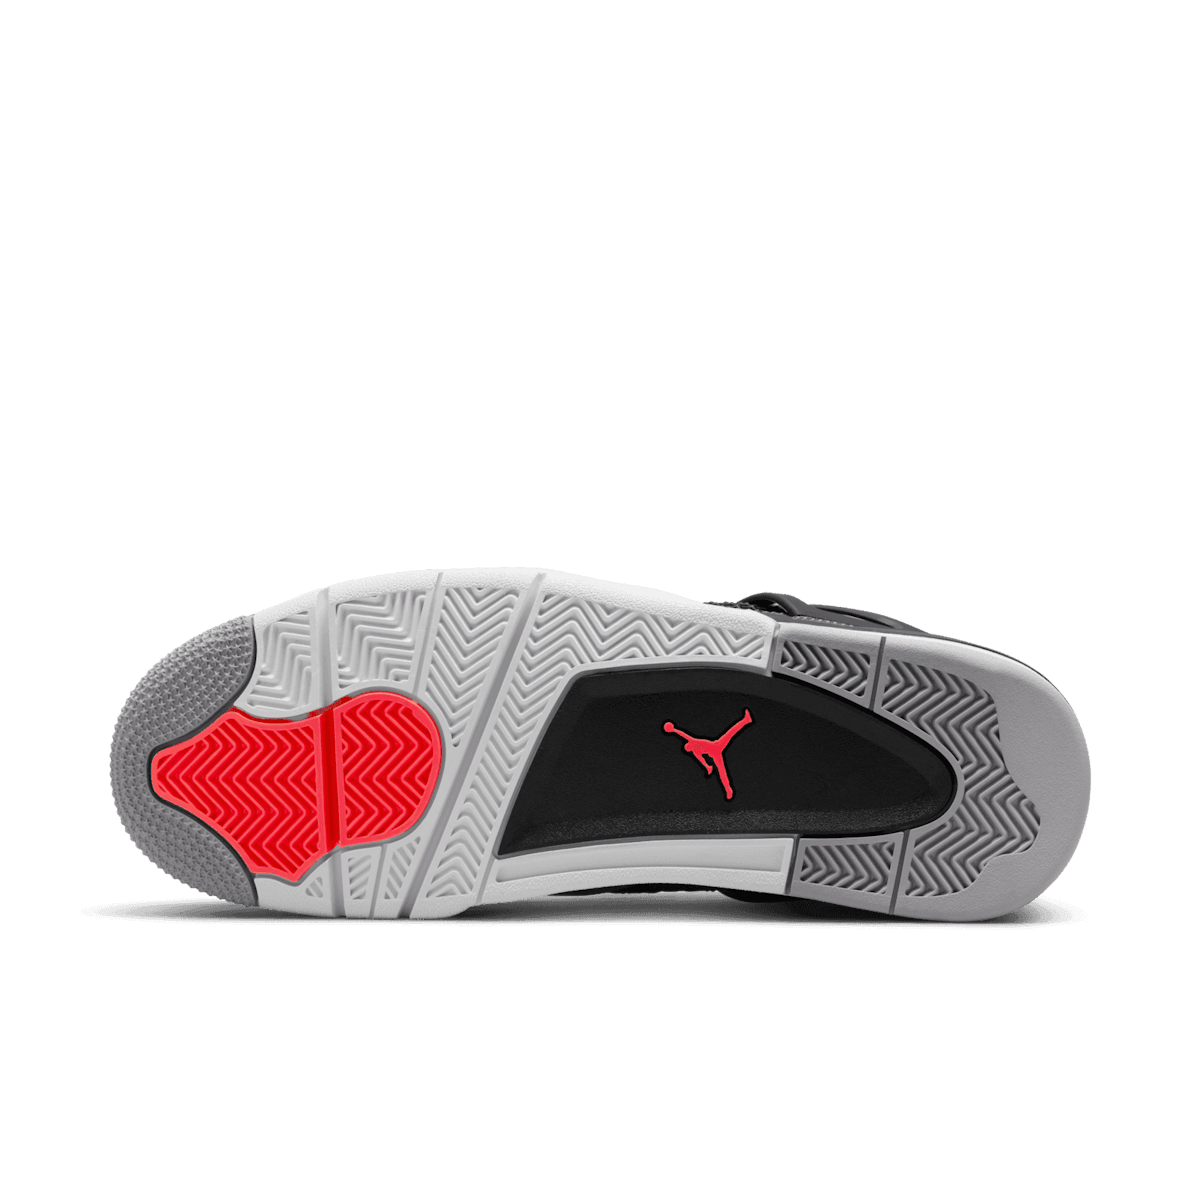 Air Jordan 4 Retro Infrared Angle 0